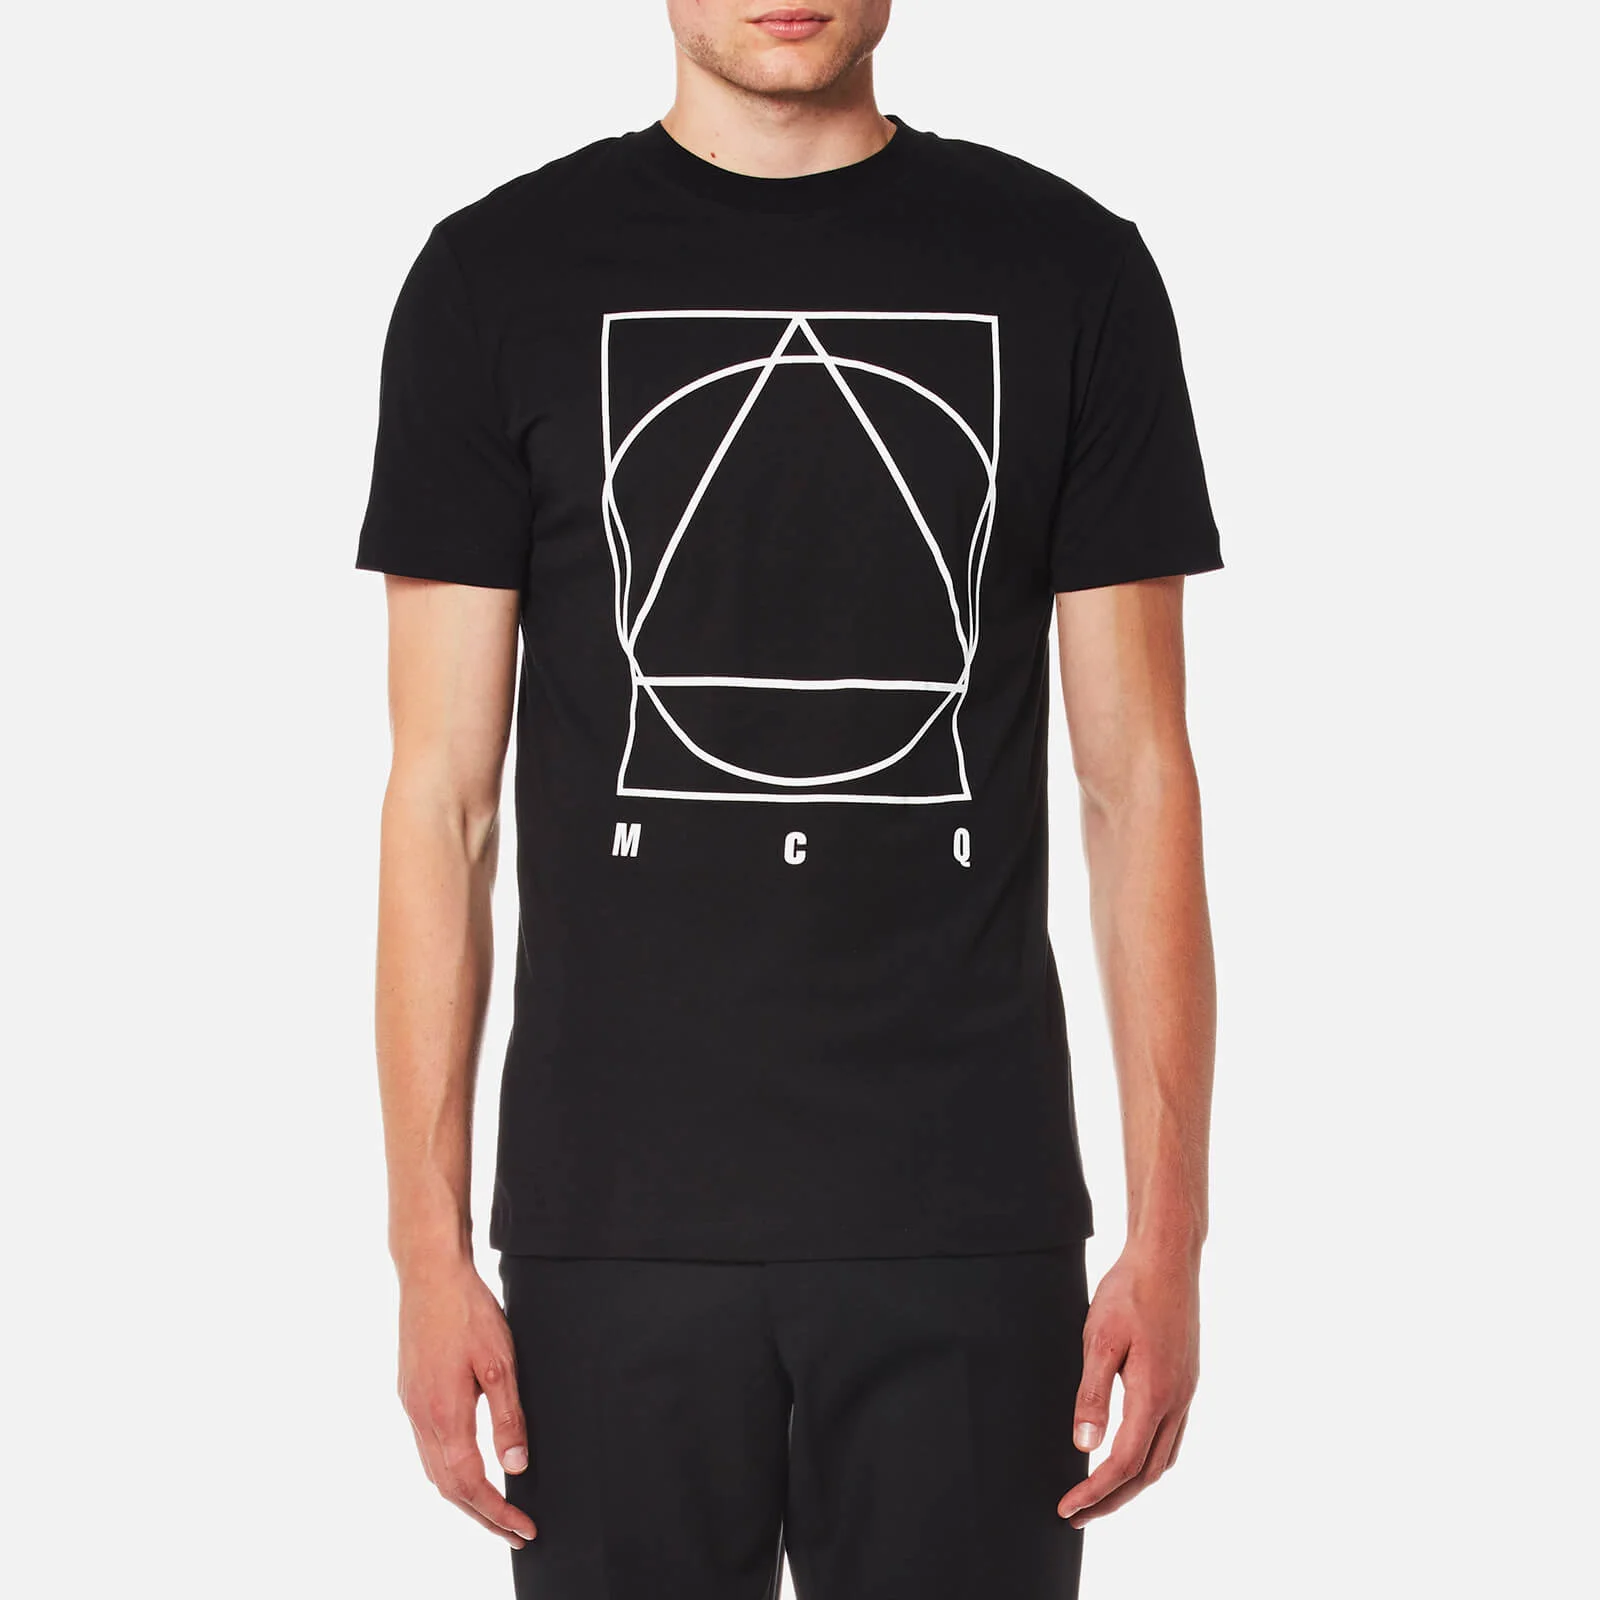 McQ Alexander McQueen Men's Crew Neck Large Logo T-Shirt - Darkest Black Image 1